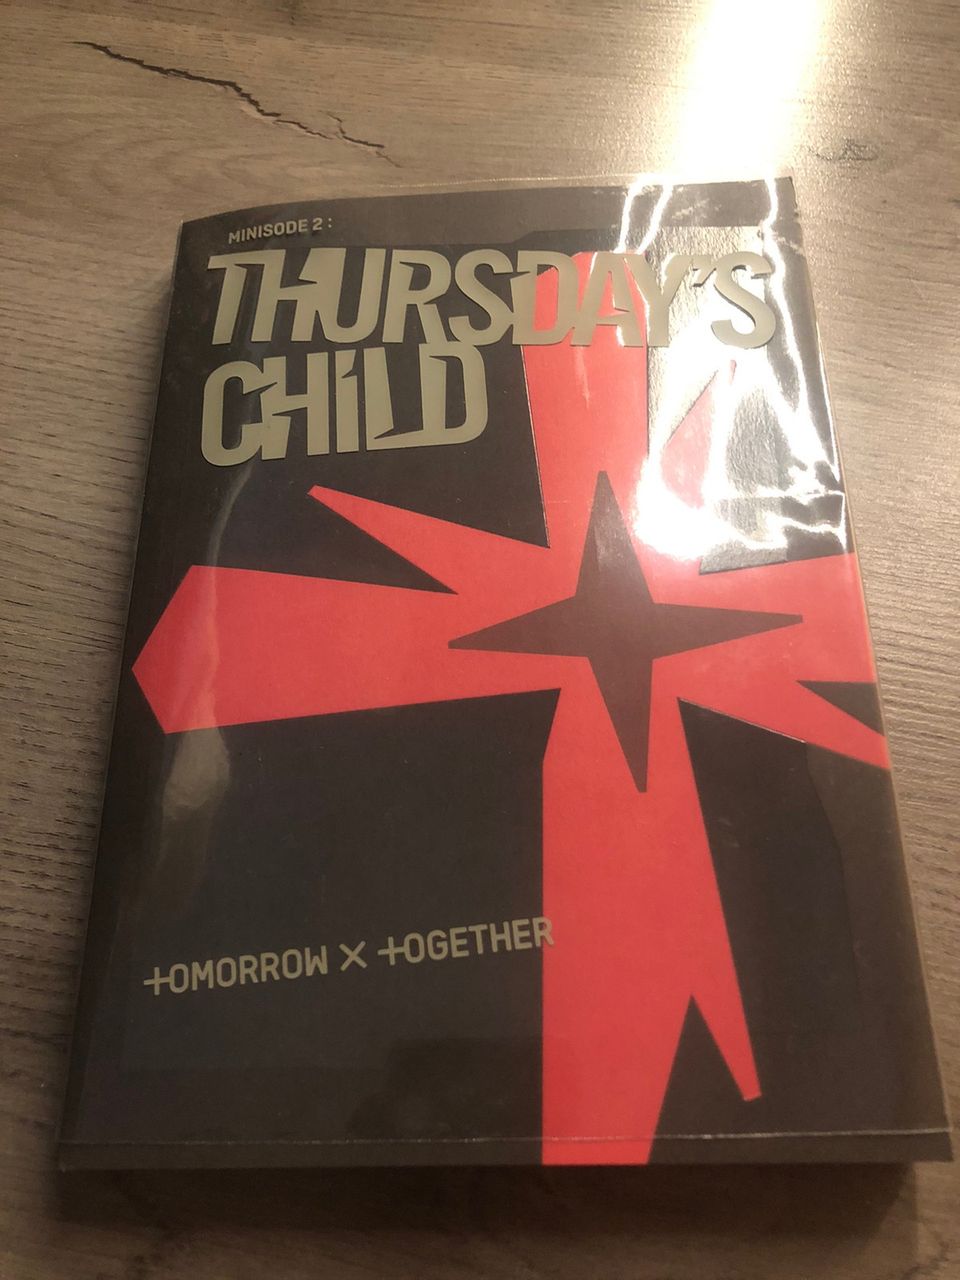 txt thursday’s child album